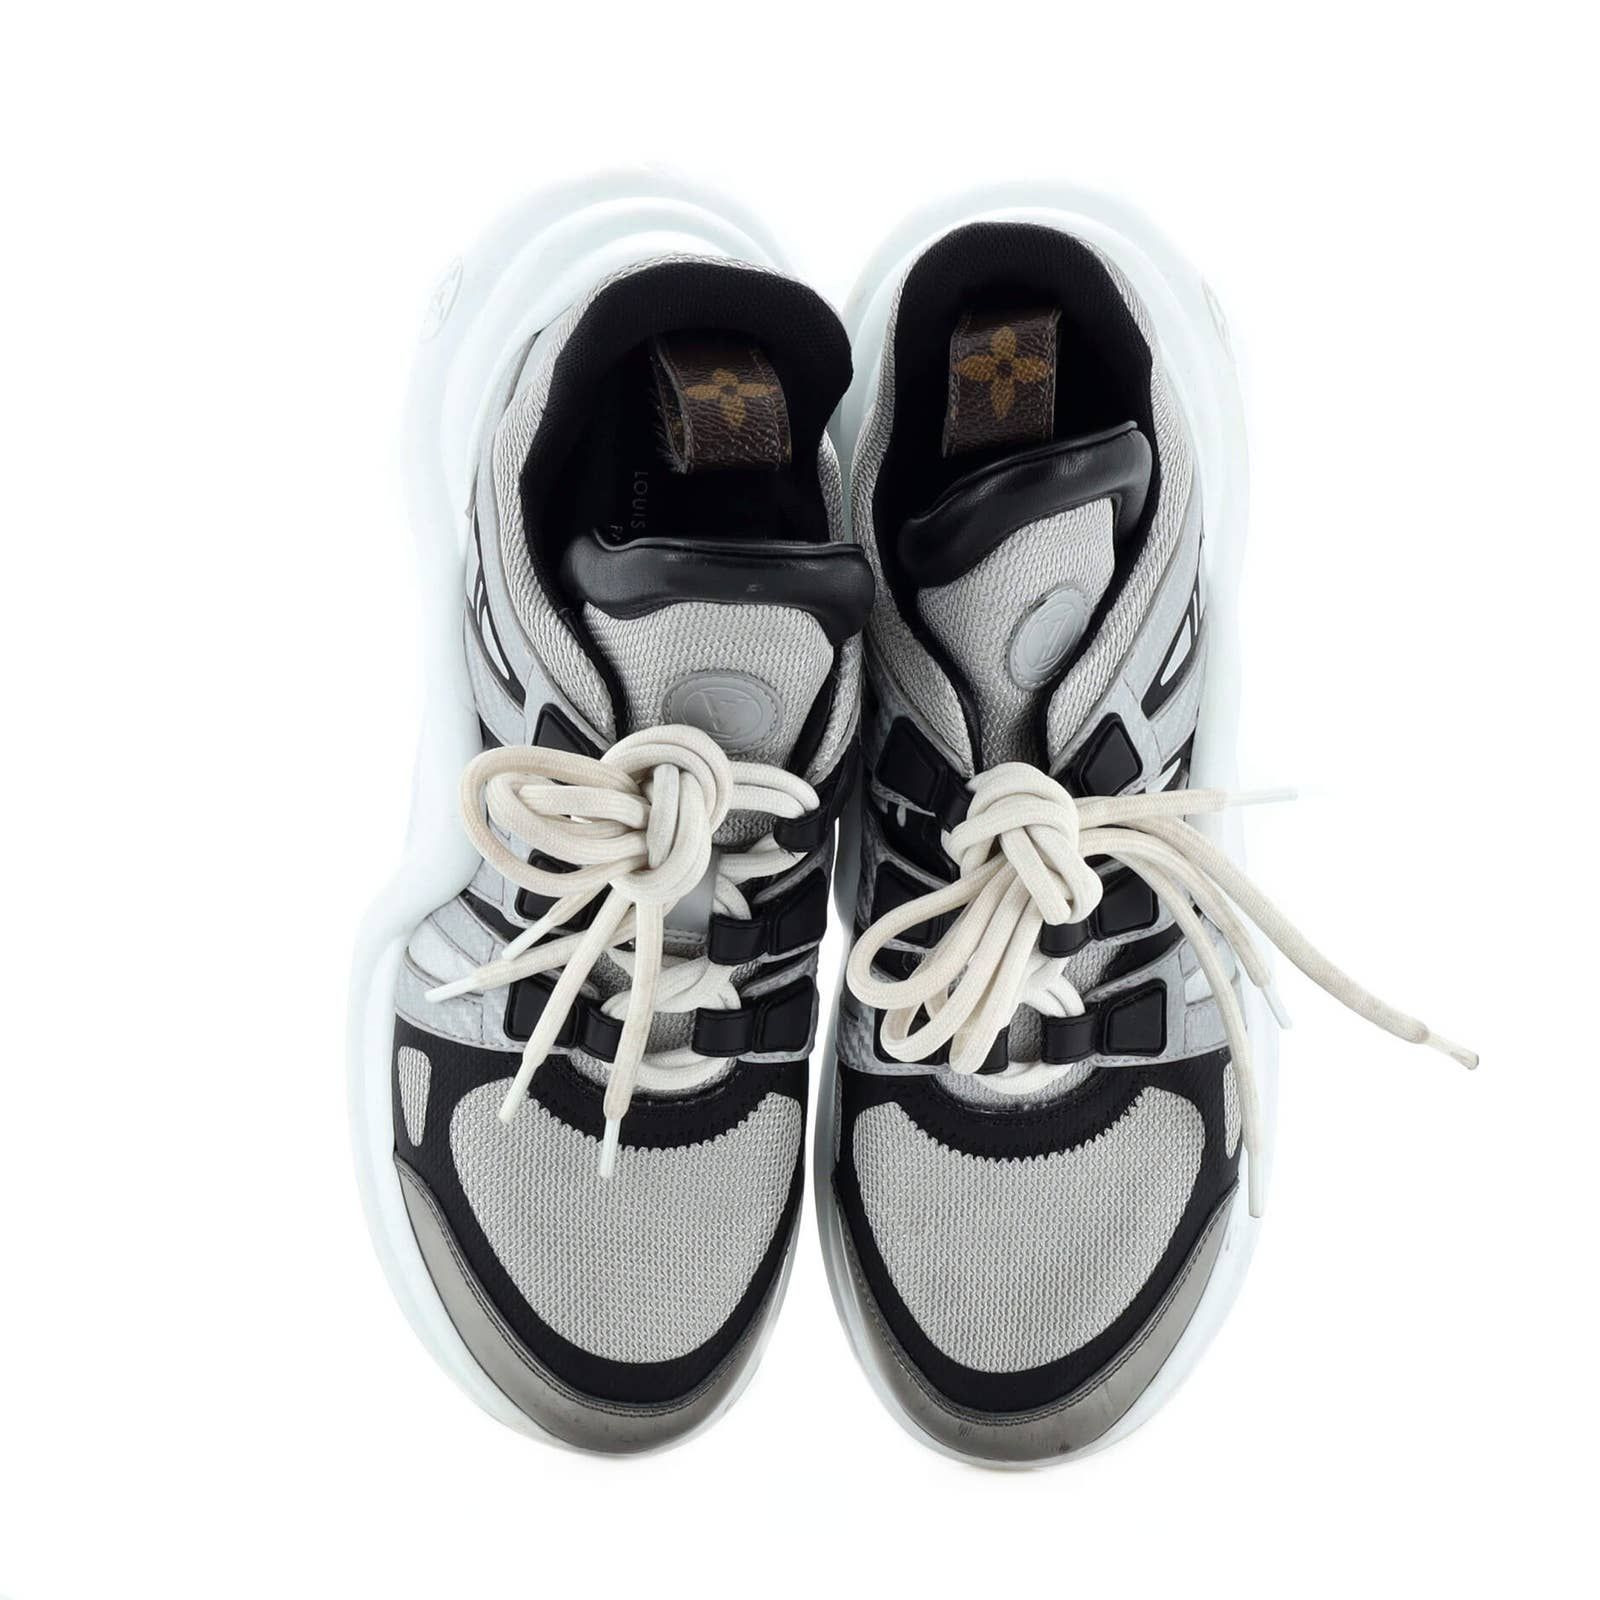 Louis Vuitton LV Archlight Sneakers Black Mesh & White Leather Size 41